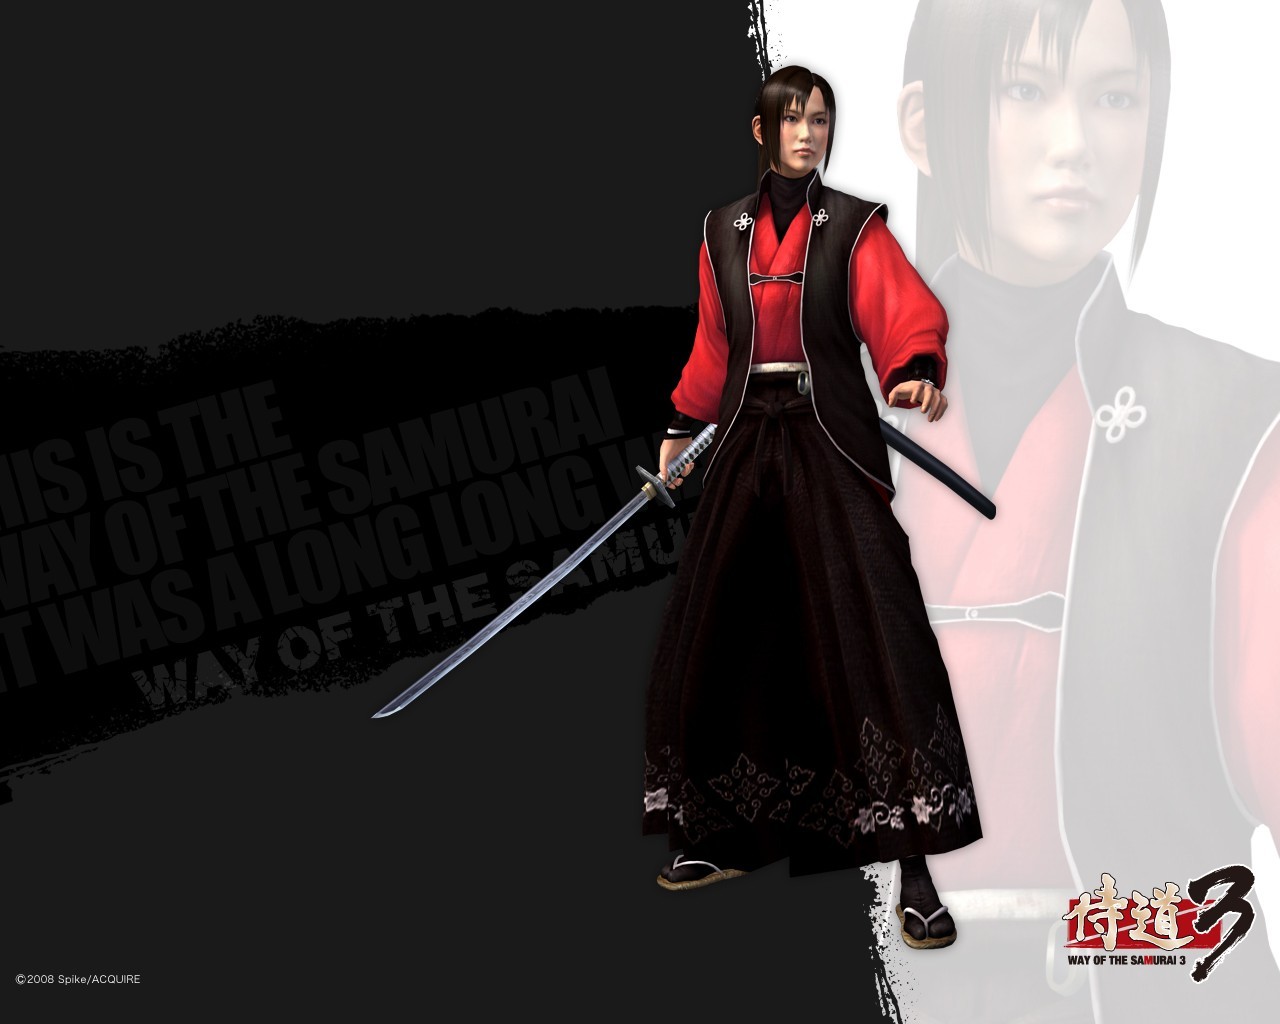 way of the samurai 1 continue